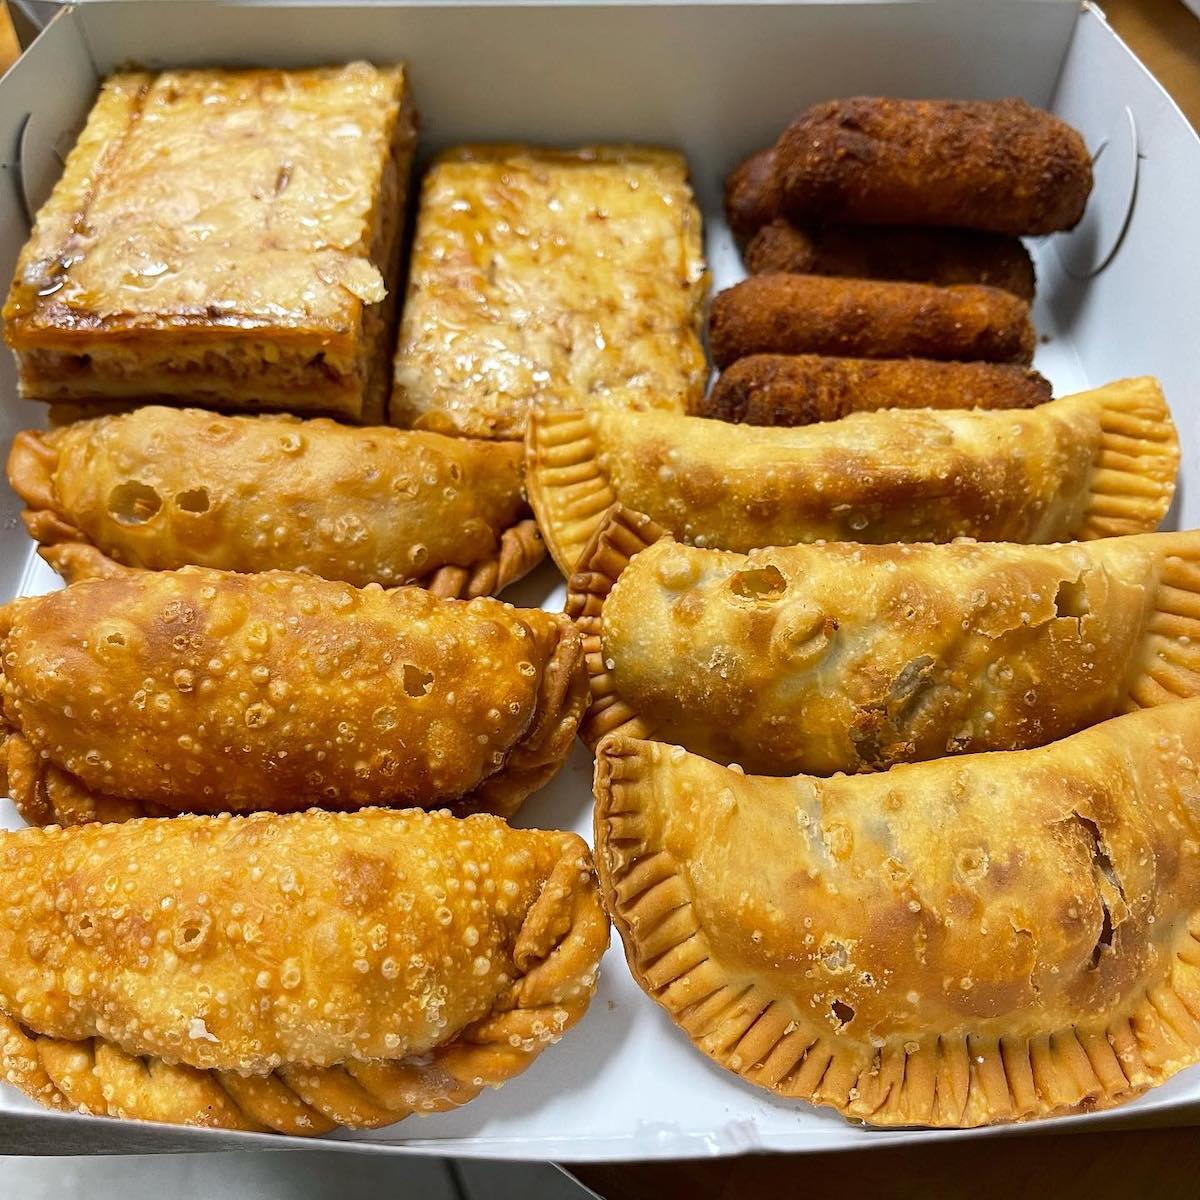 Box of Empanadas and Pastelitos from Breadman Bakery in Hialeah, Florida